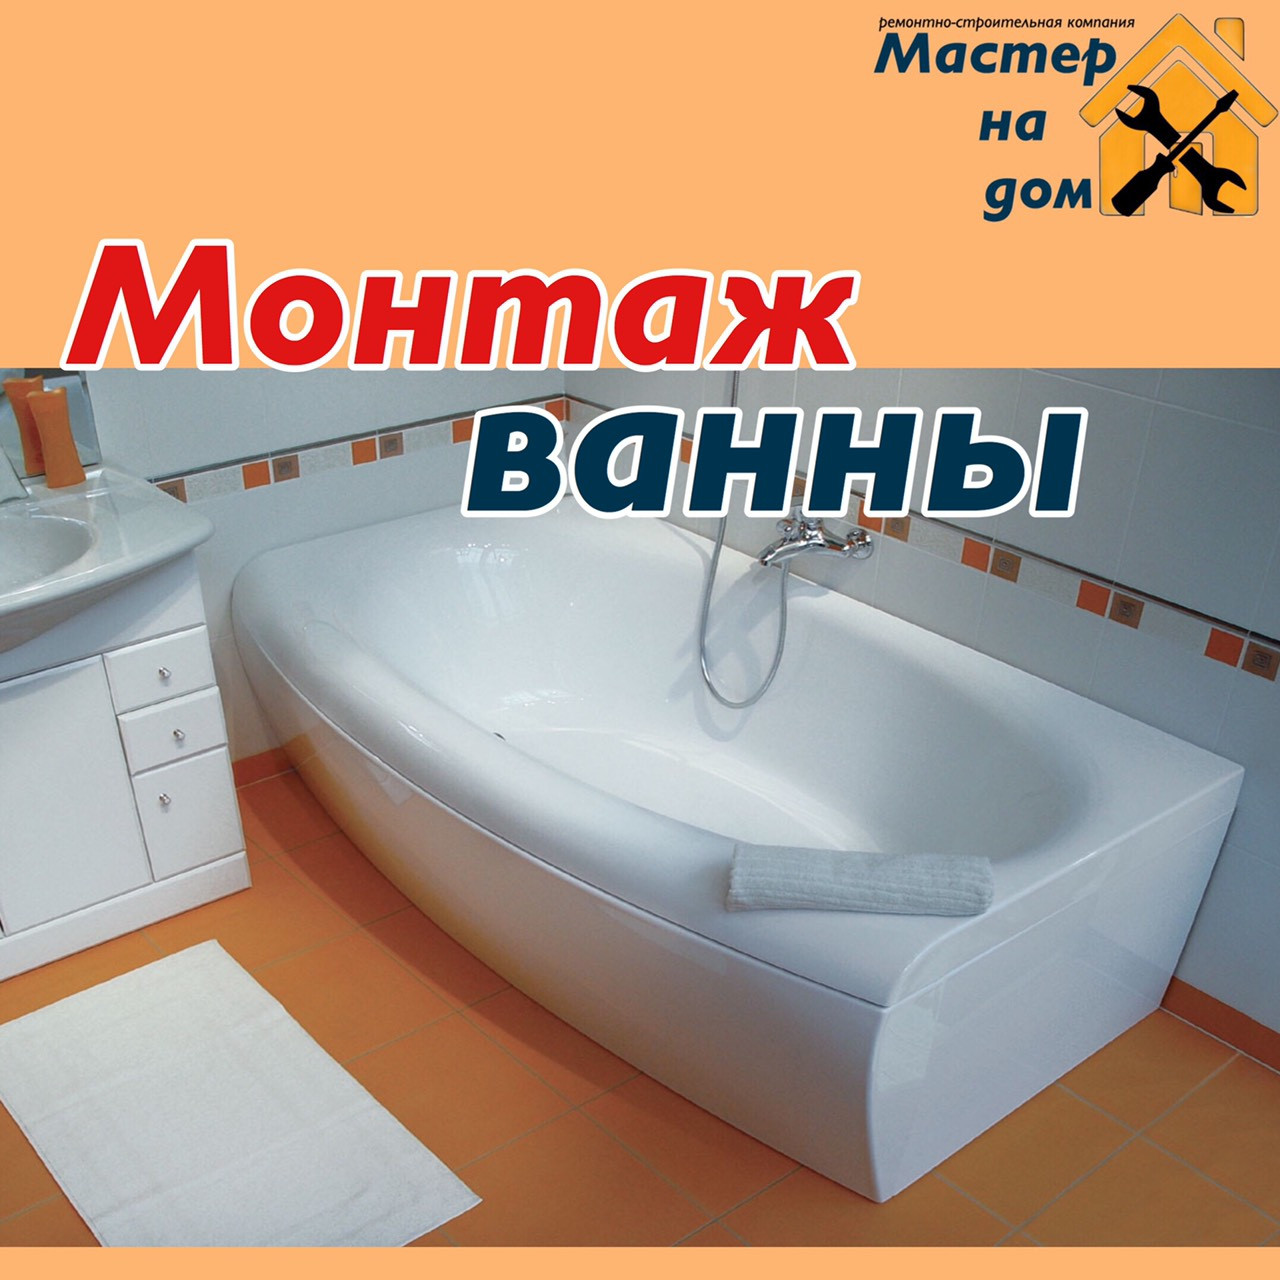 Монтаж ванни, фото 1